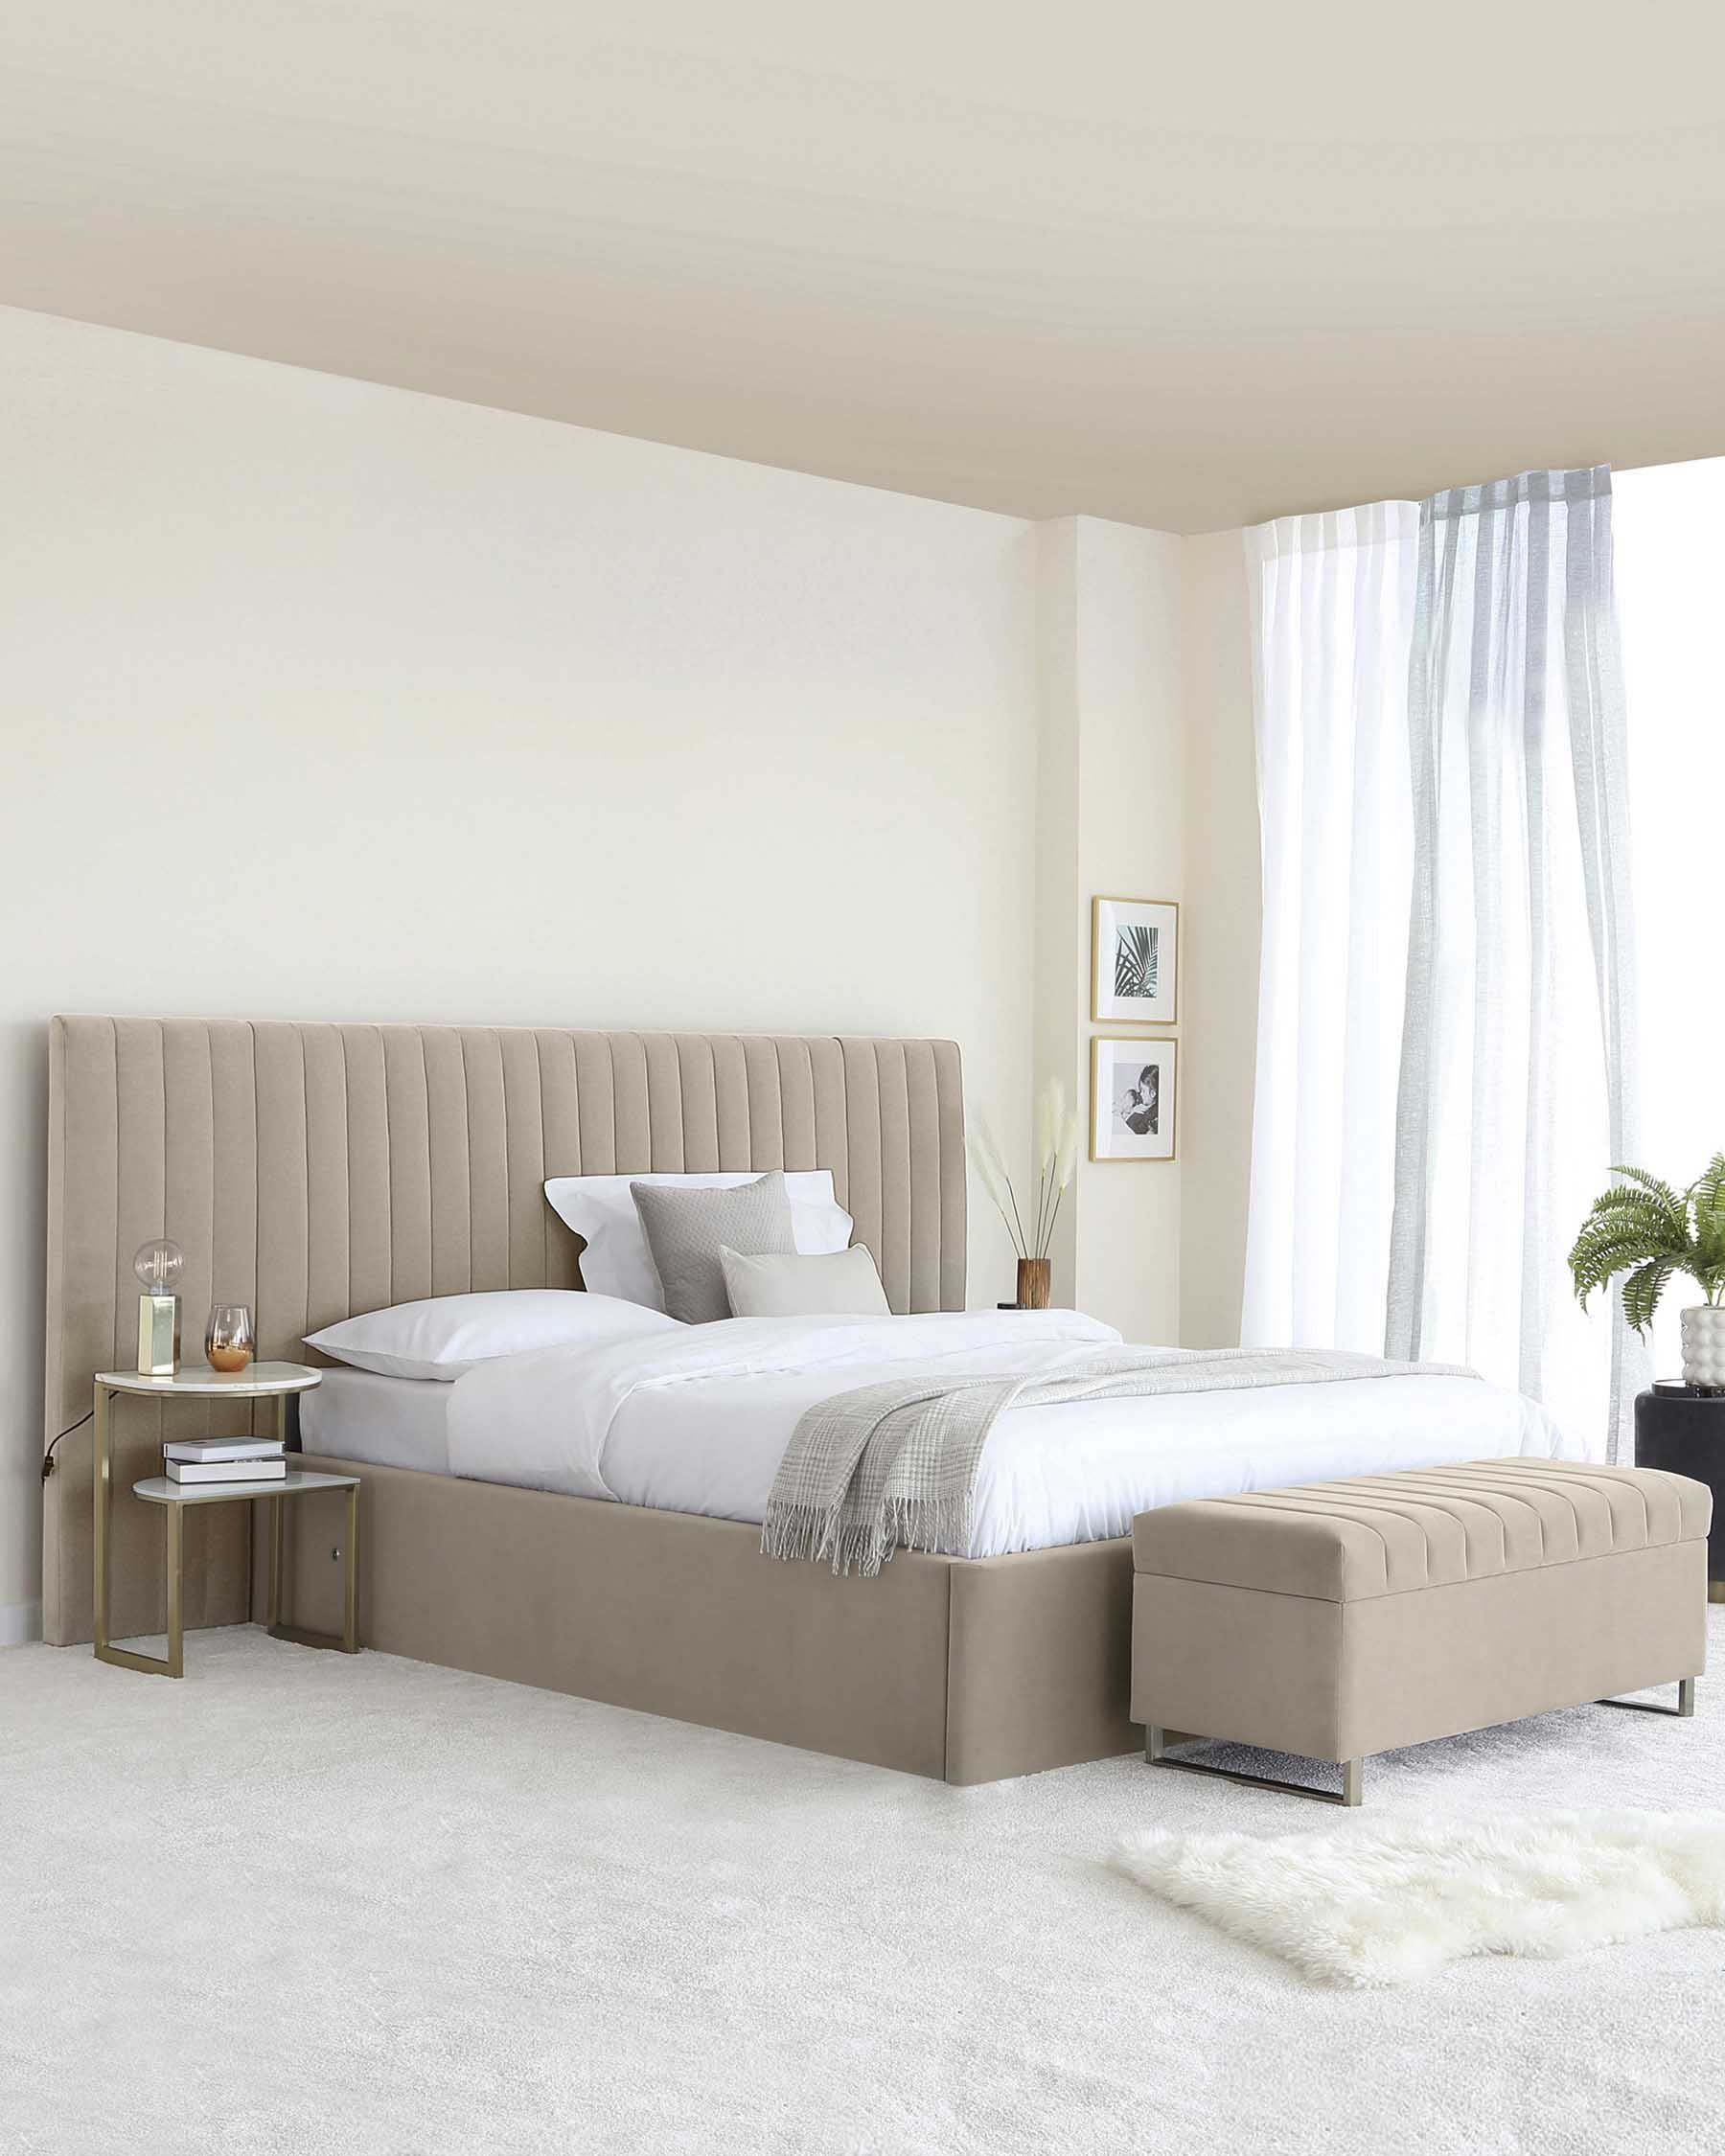 The Ultimate Bed Frame for Maximum Comfort: Super King Size Bed Frame